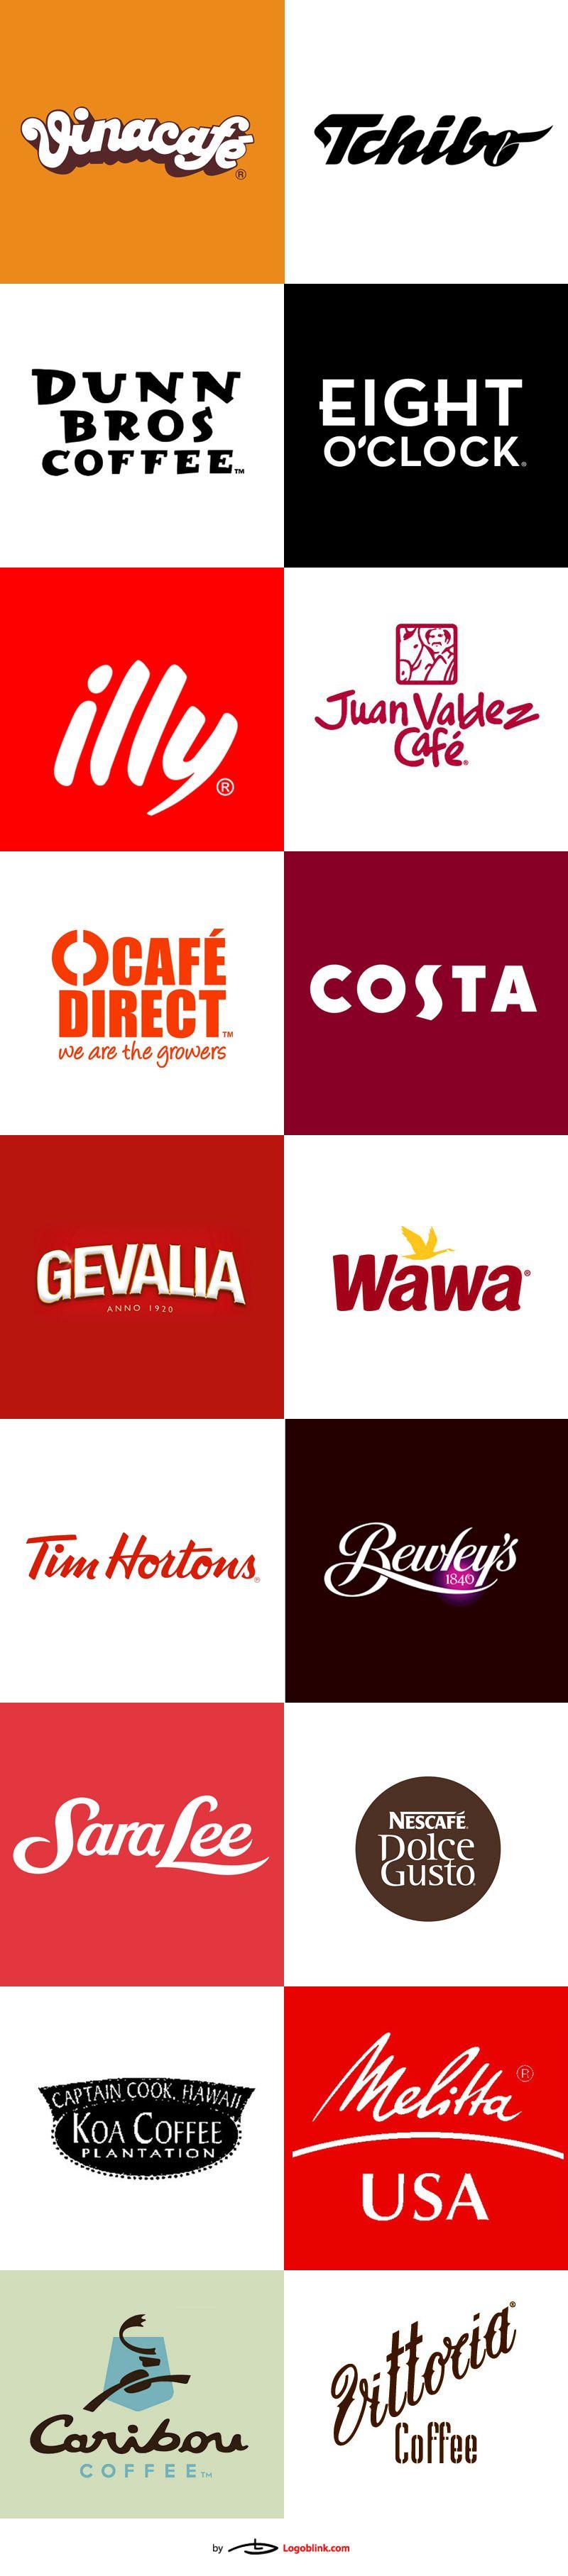 Popular Coffee Logo - 36 Famous coffee logos from around the world - Logoblink.com